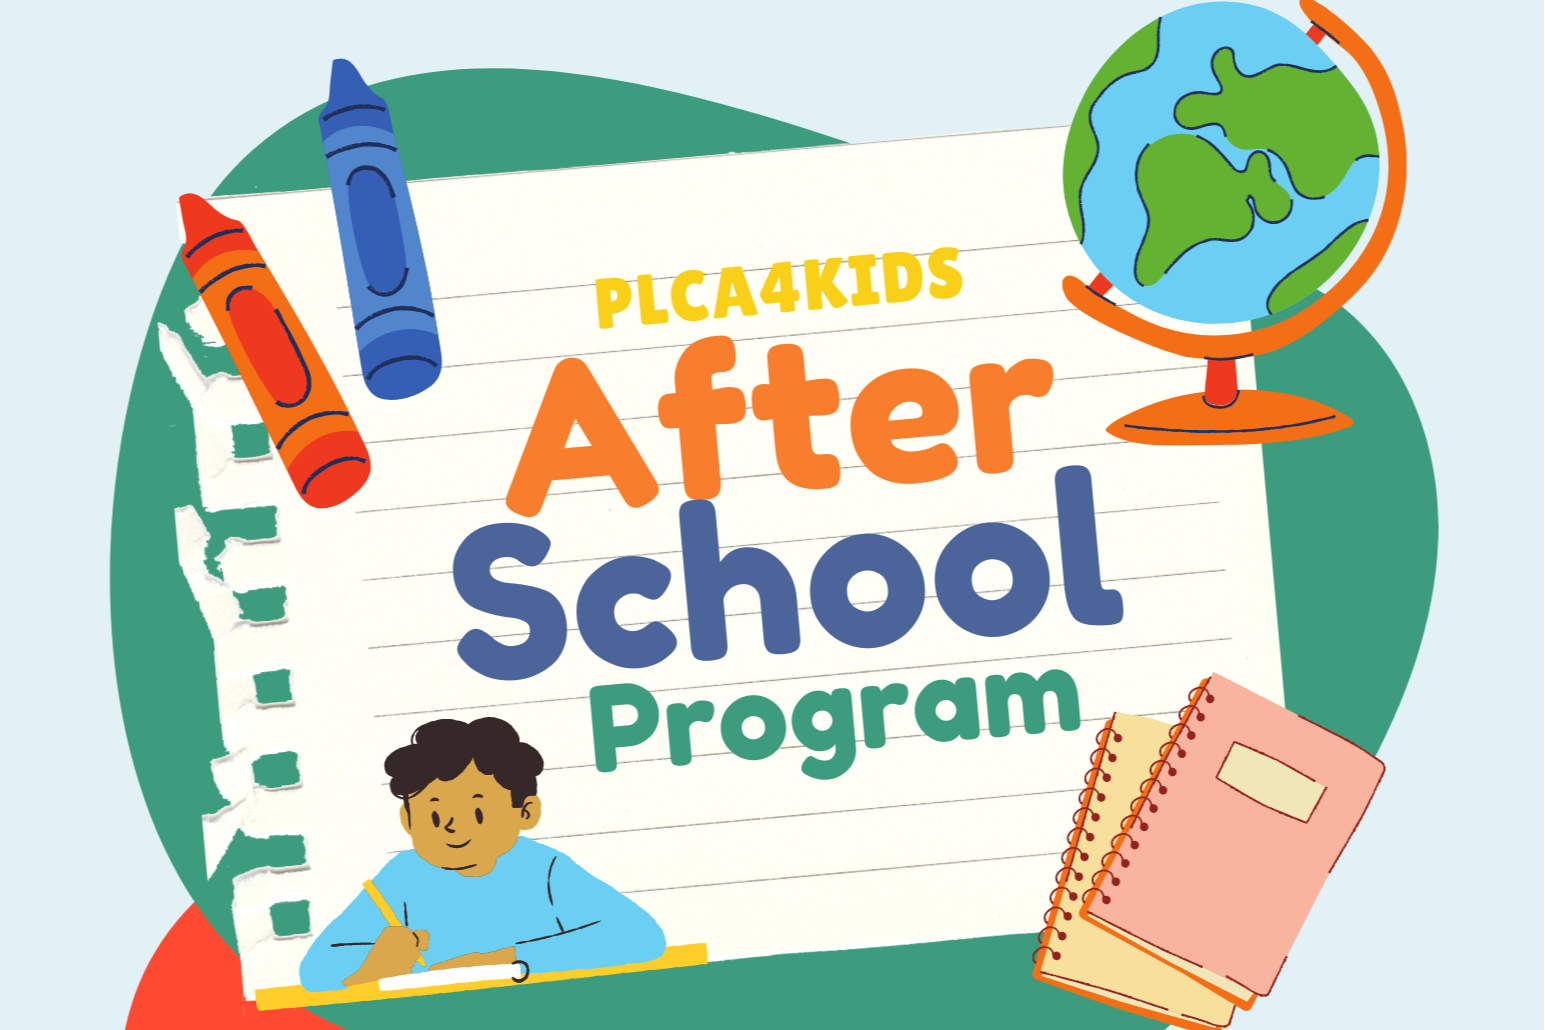 PLCA4Kids After School Program